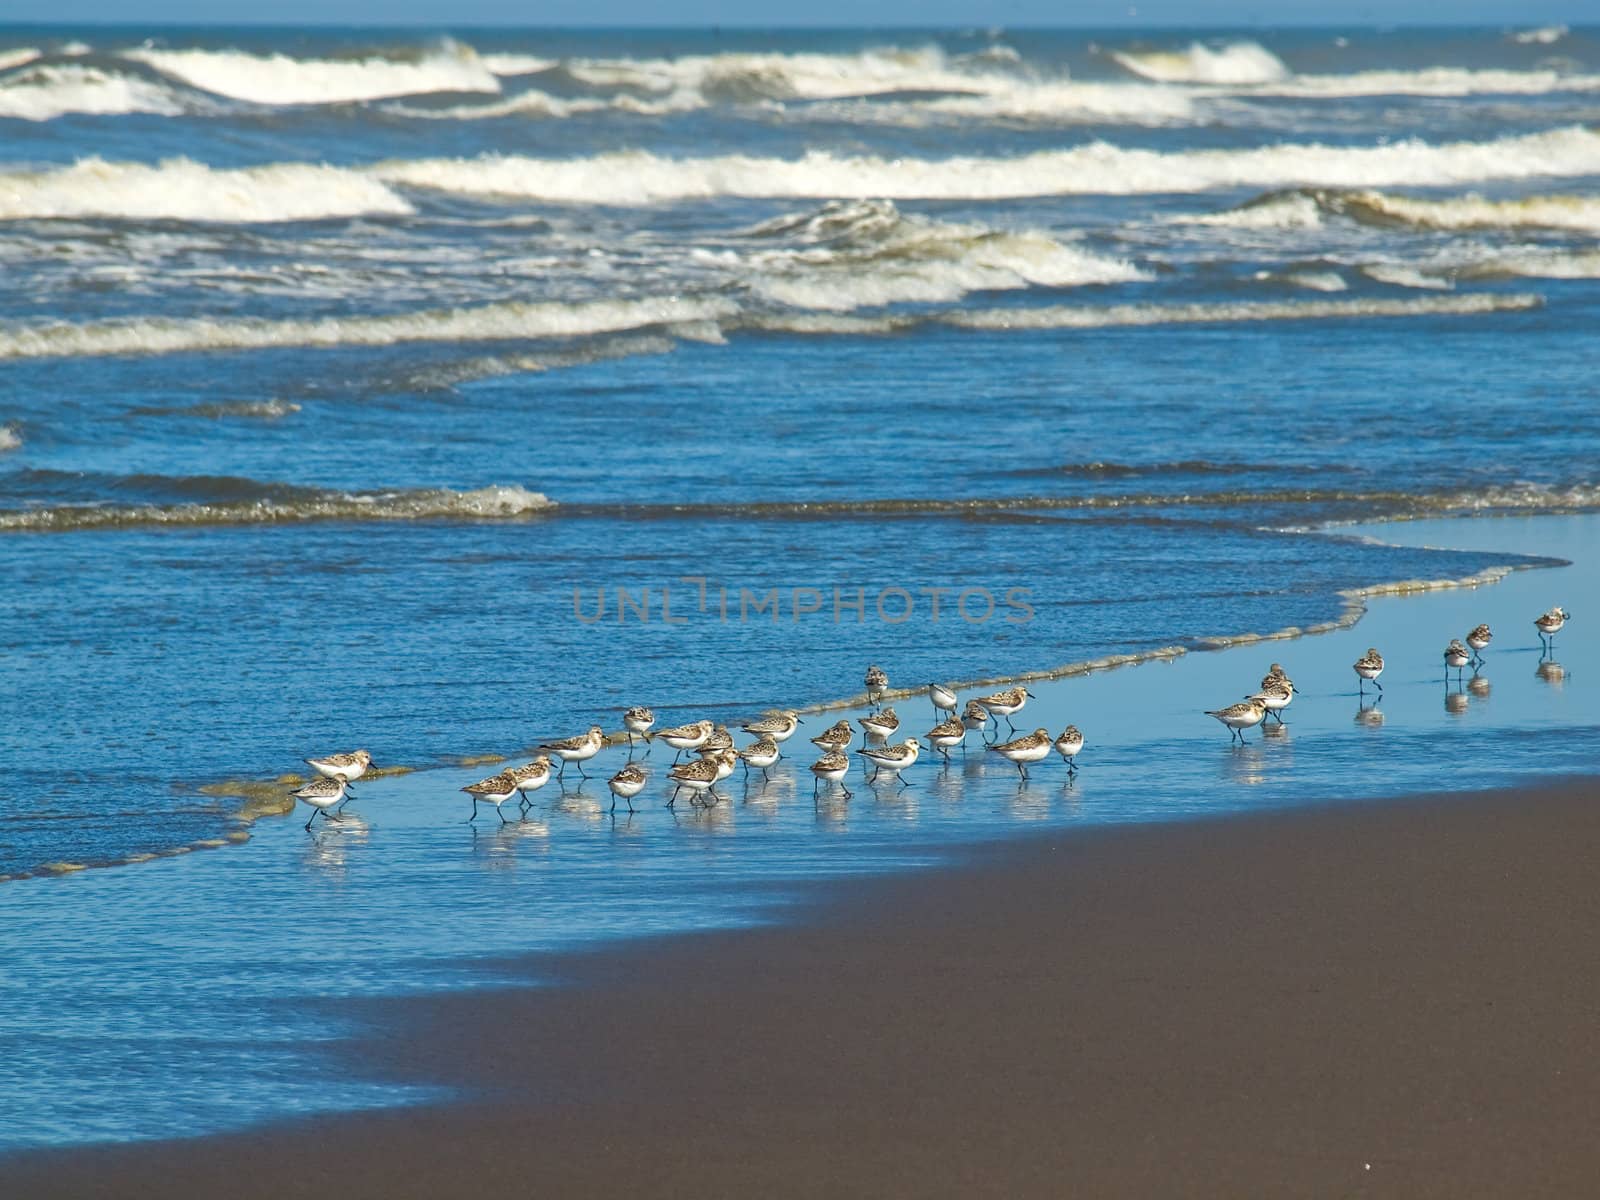 A Flock of Little Brown Seabirds at the Seashore by Frankljunior